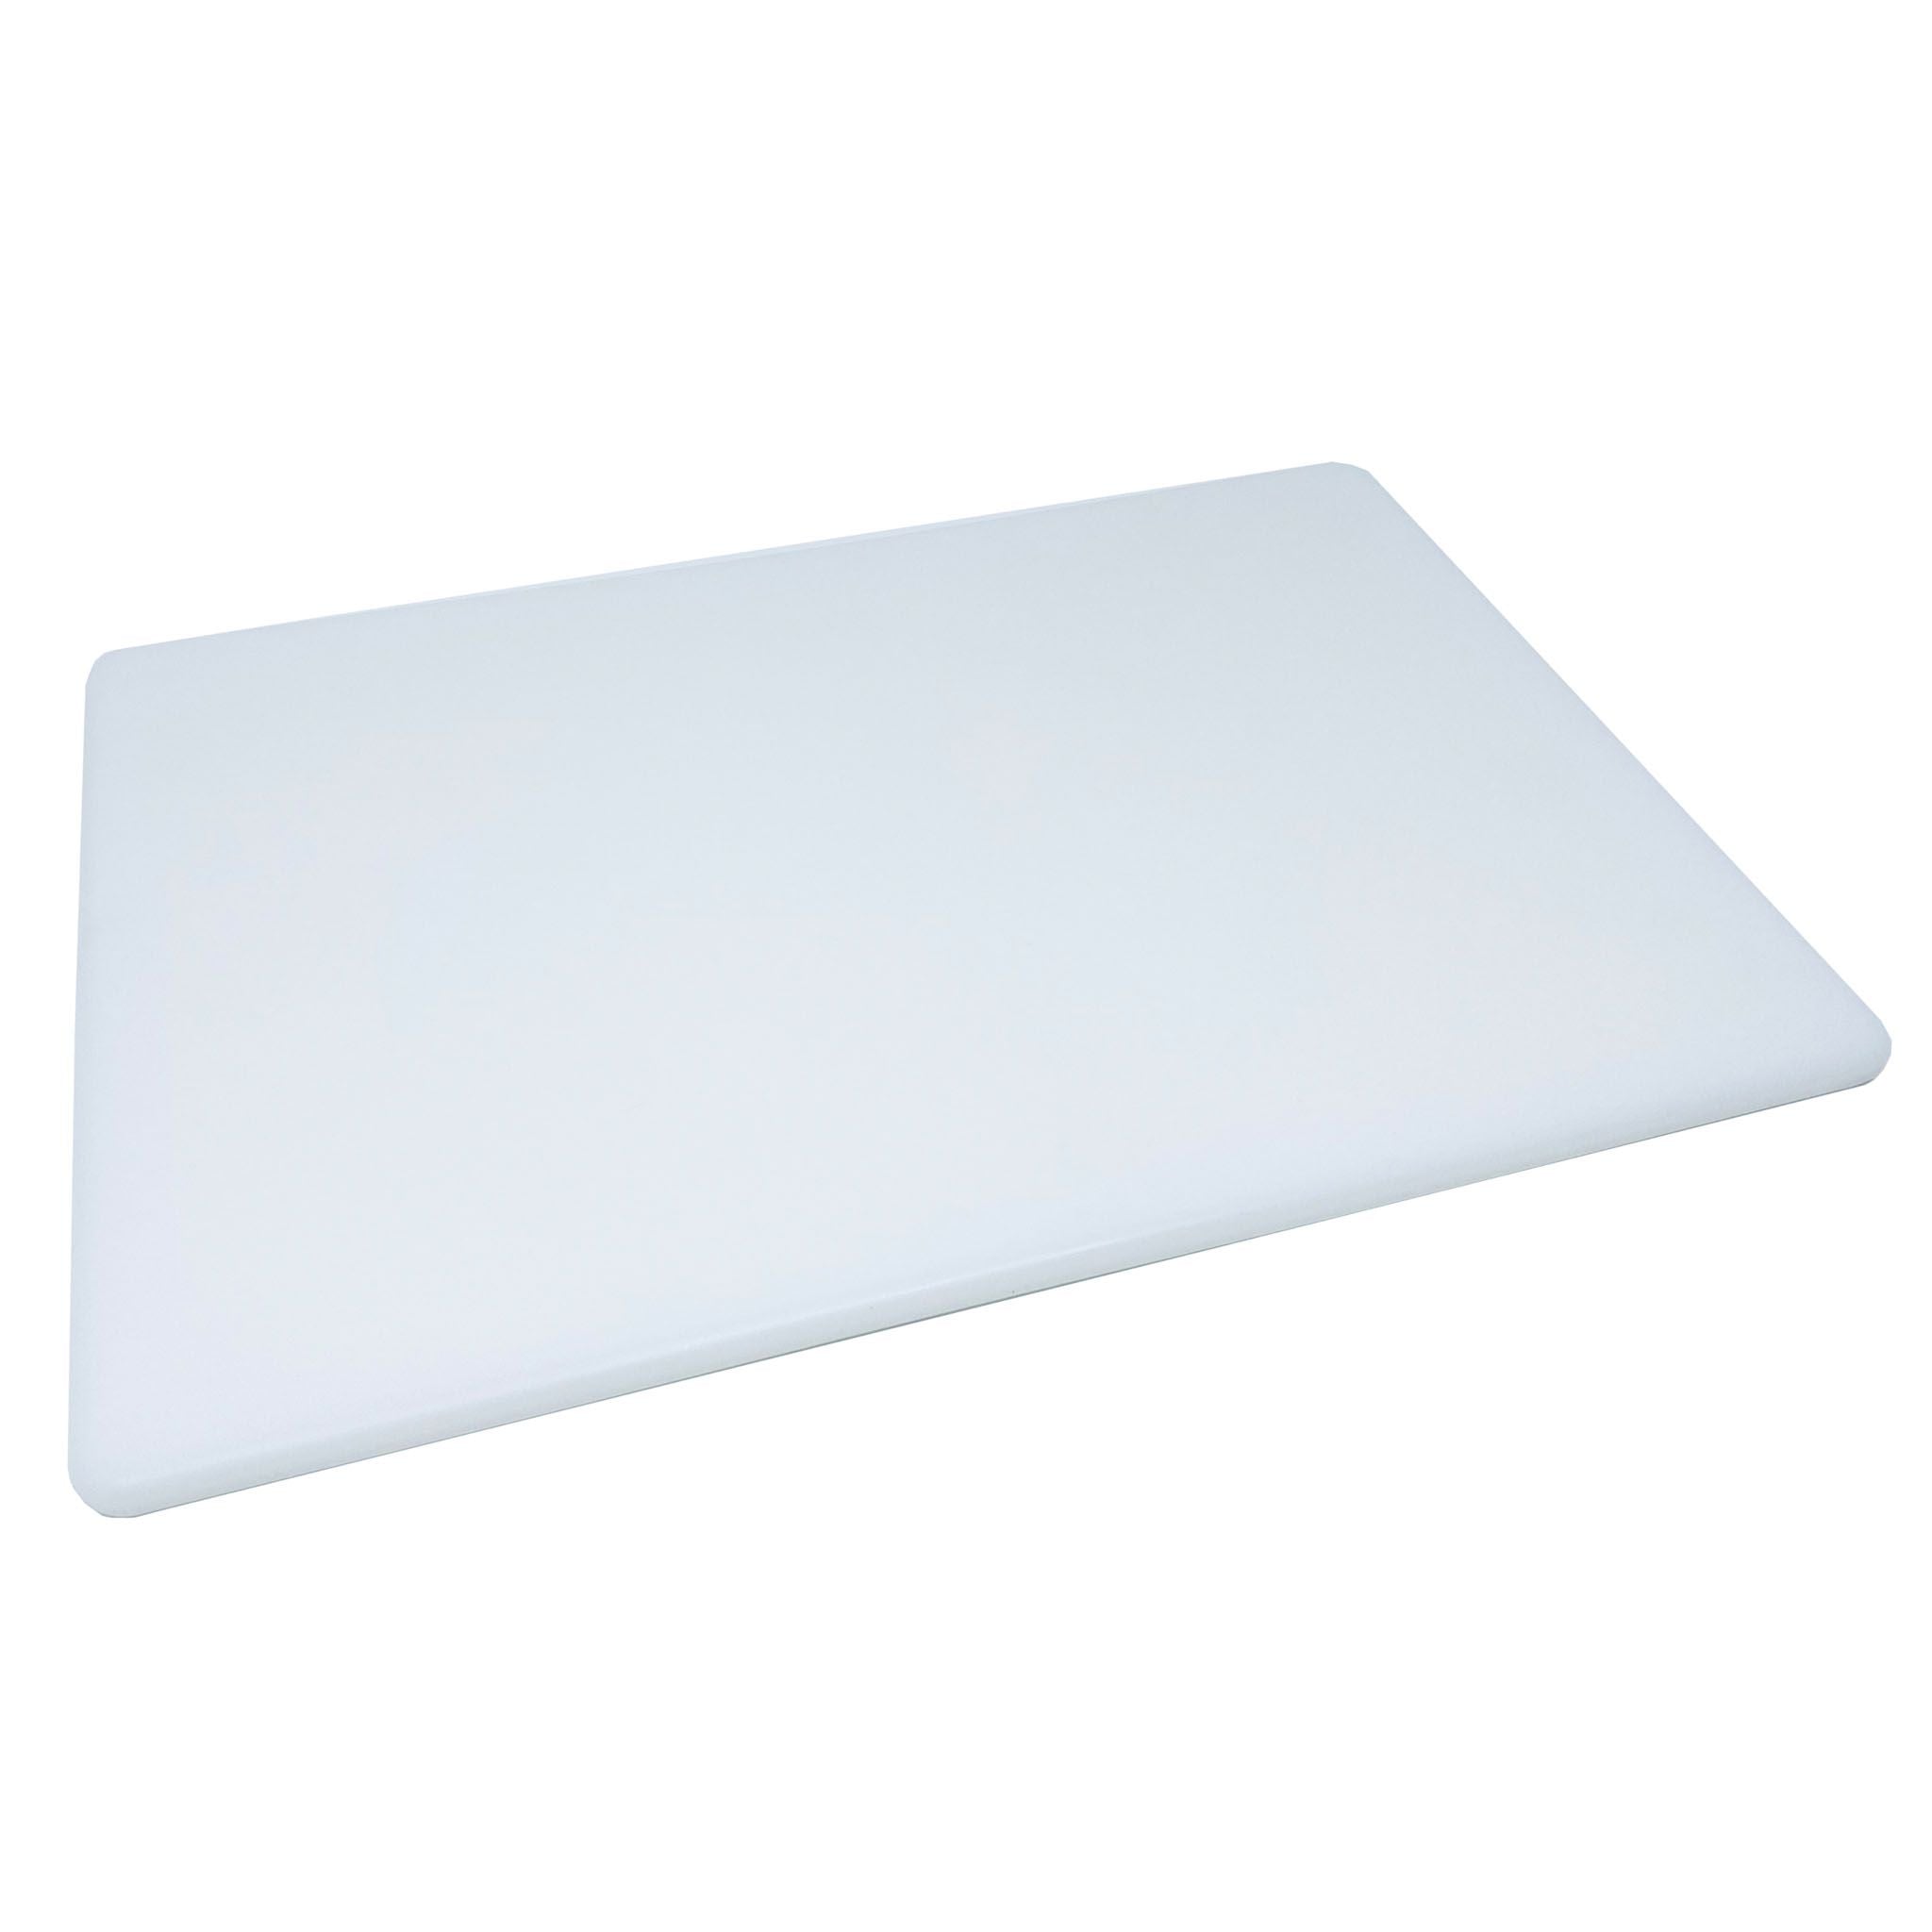 White Professional HDPE Cutting Board